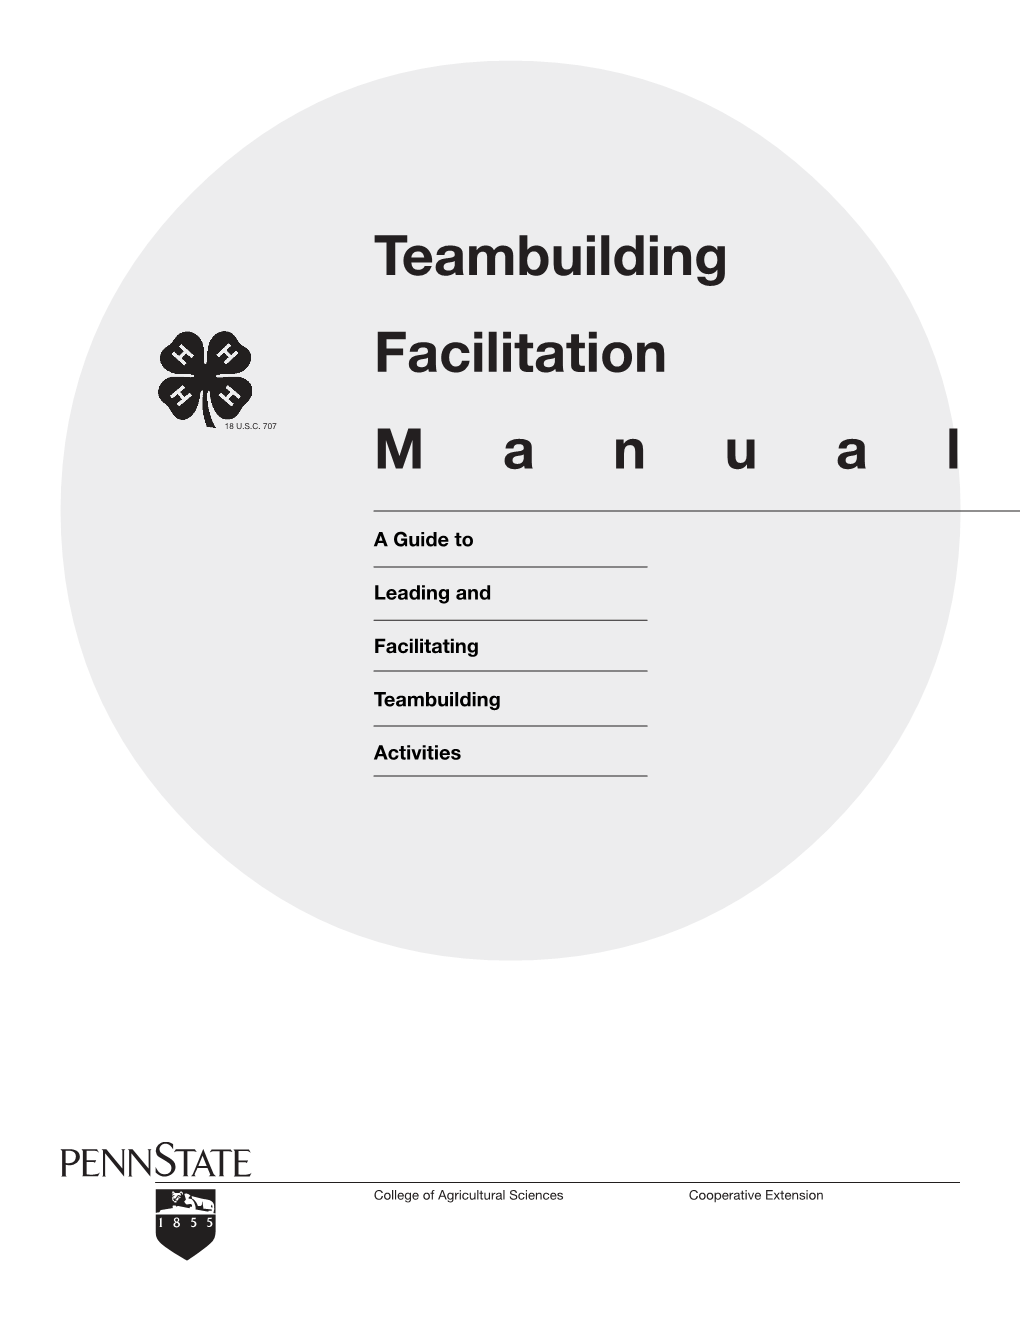 Teambuilding Facilitation M a N U